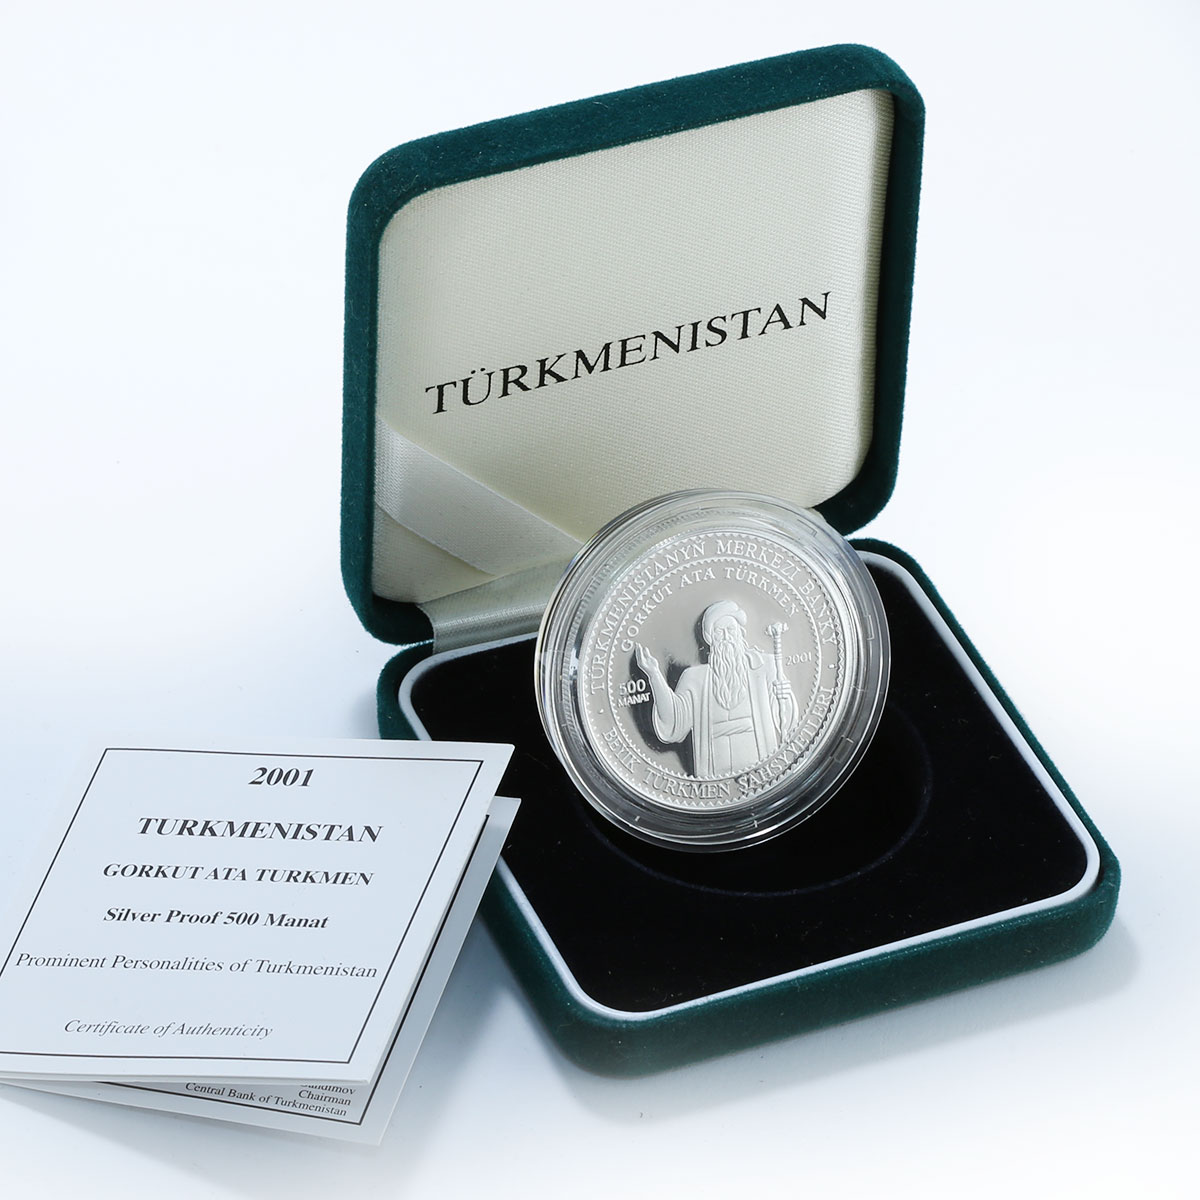 Turkmenistan 500 manat Gorkut poet songwriter and composer silver coin 2001